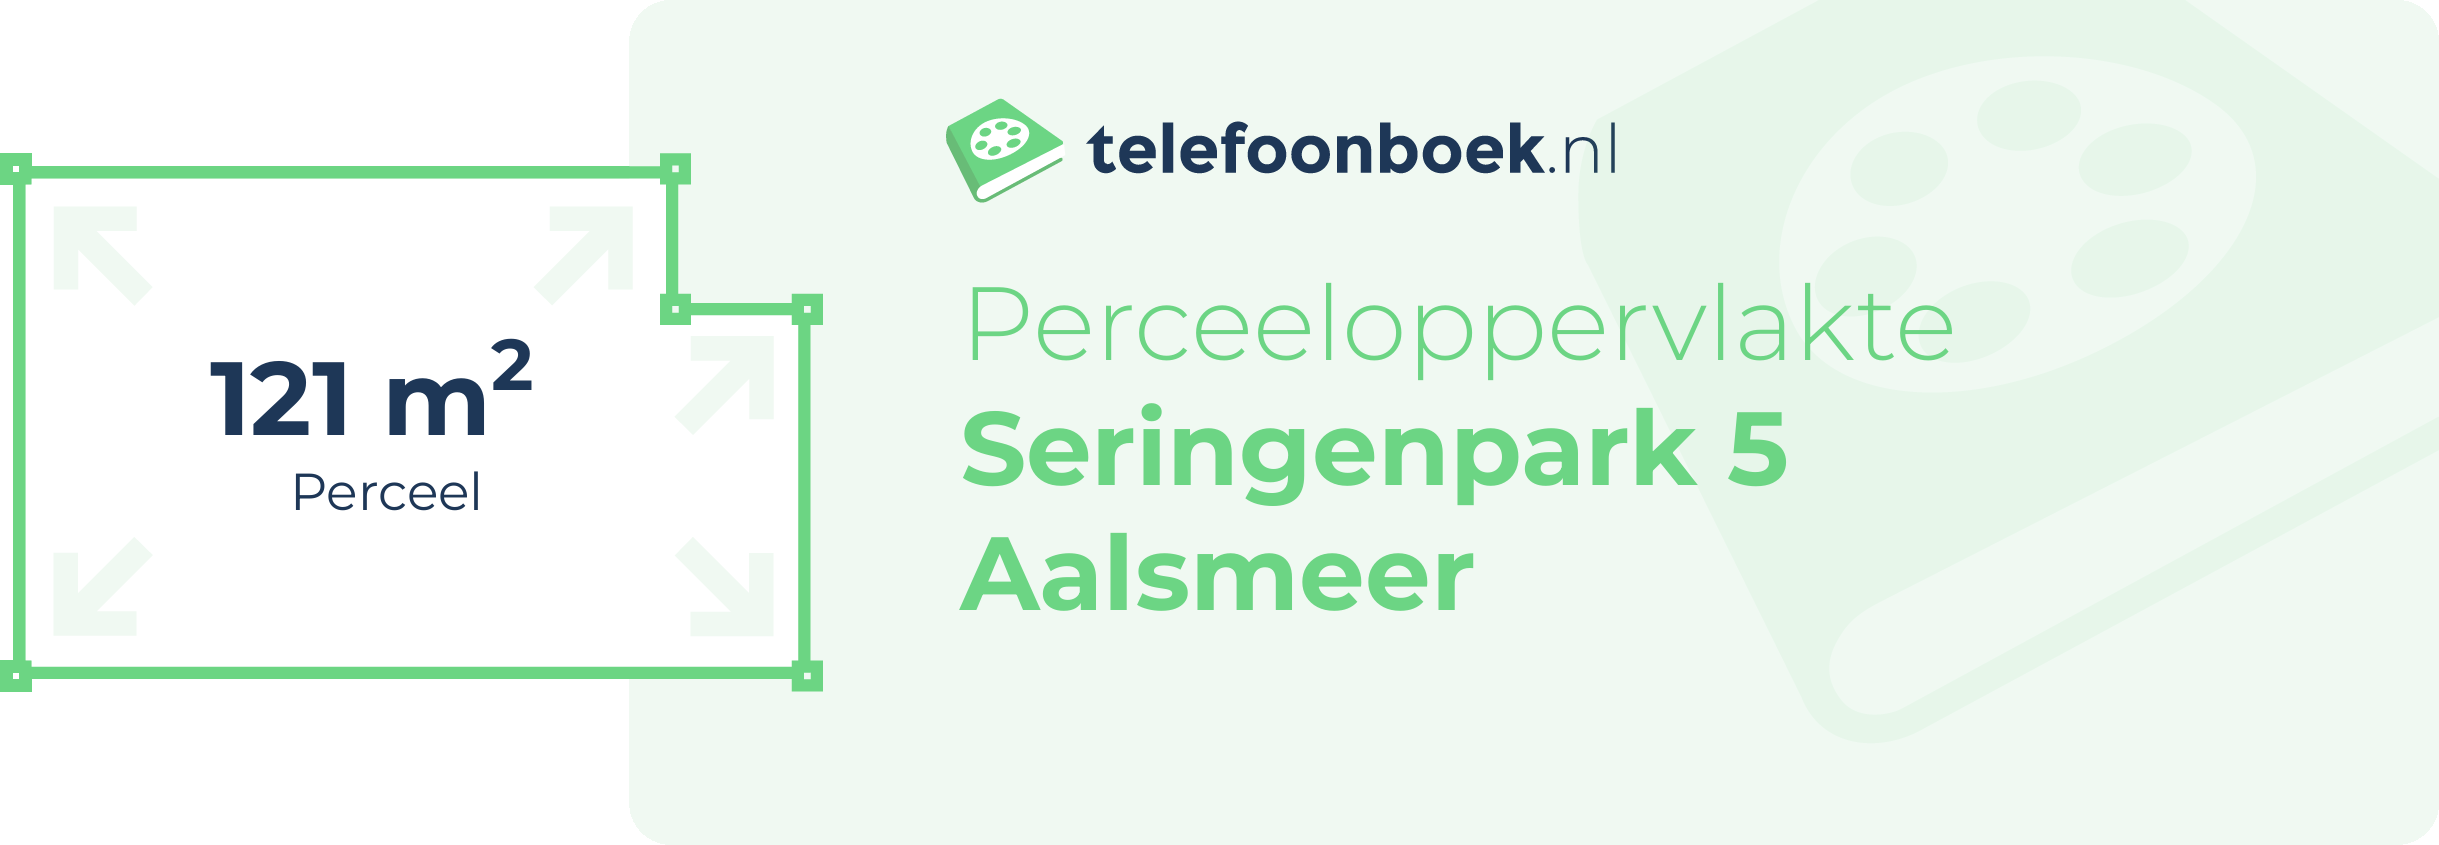 Perceeloppervlakte Seringenpark 5 Aalsmeer